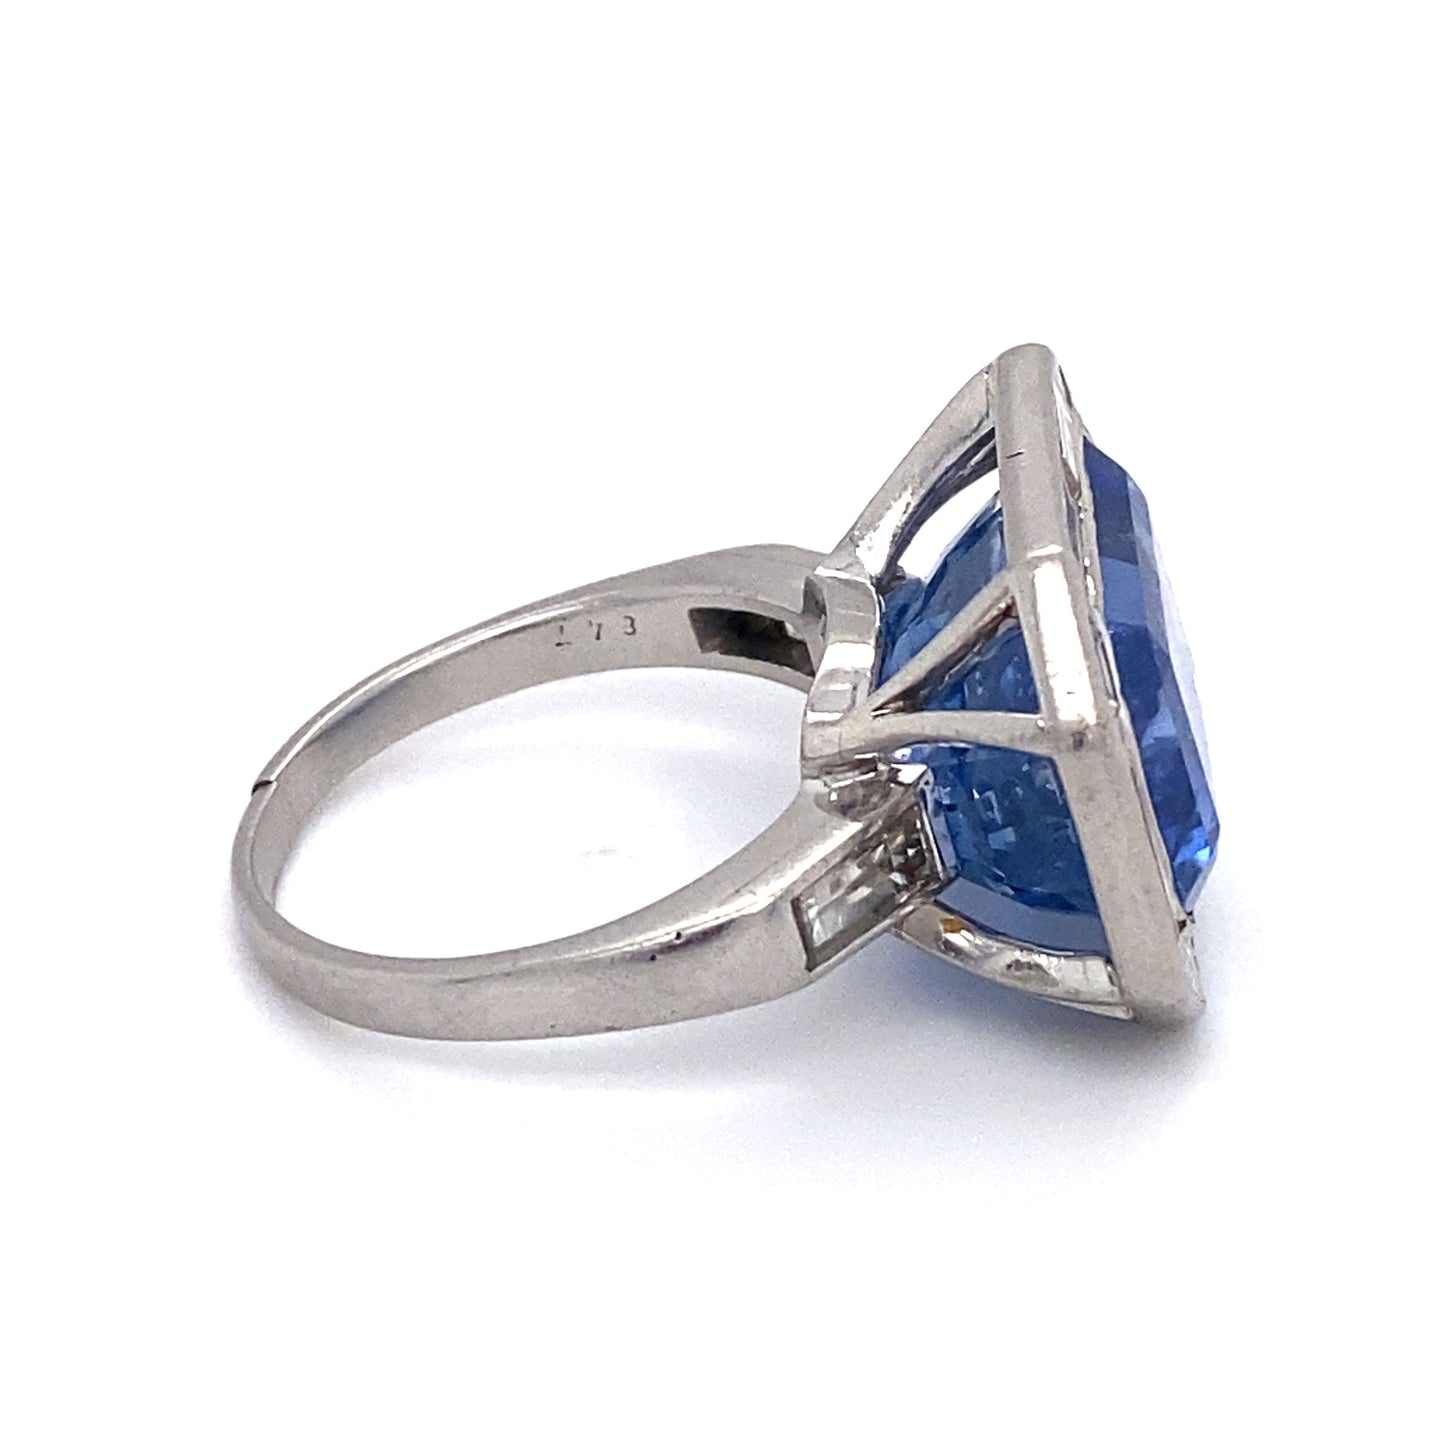 Circa 1980 20 Carat Natural Ceylon Sapphire and Diamond Ring in Platinum